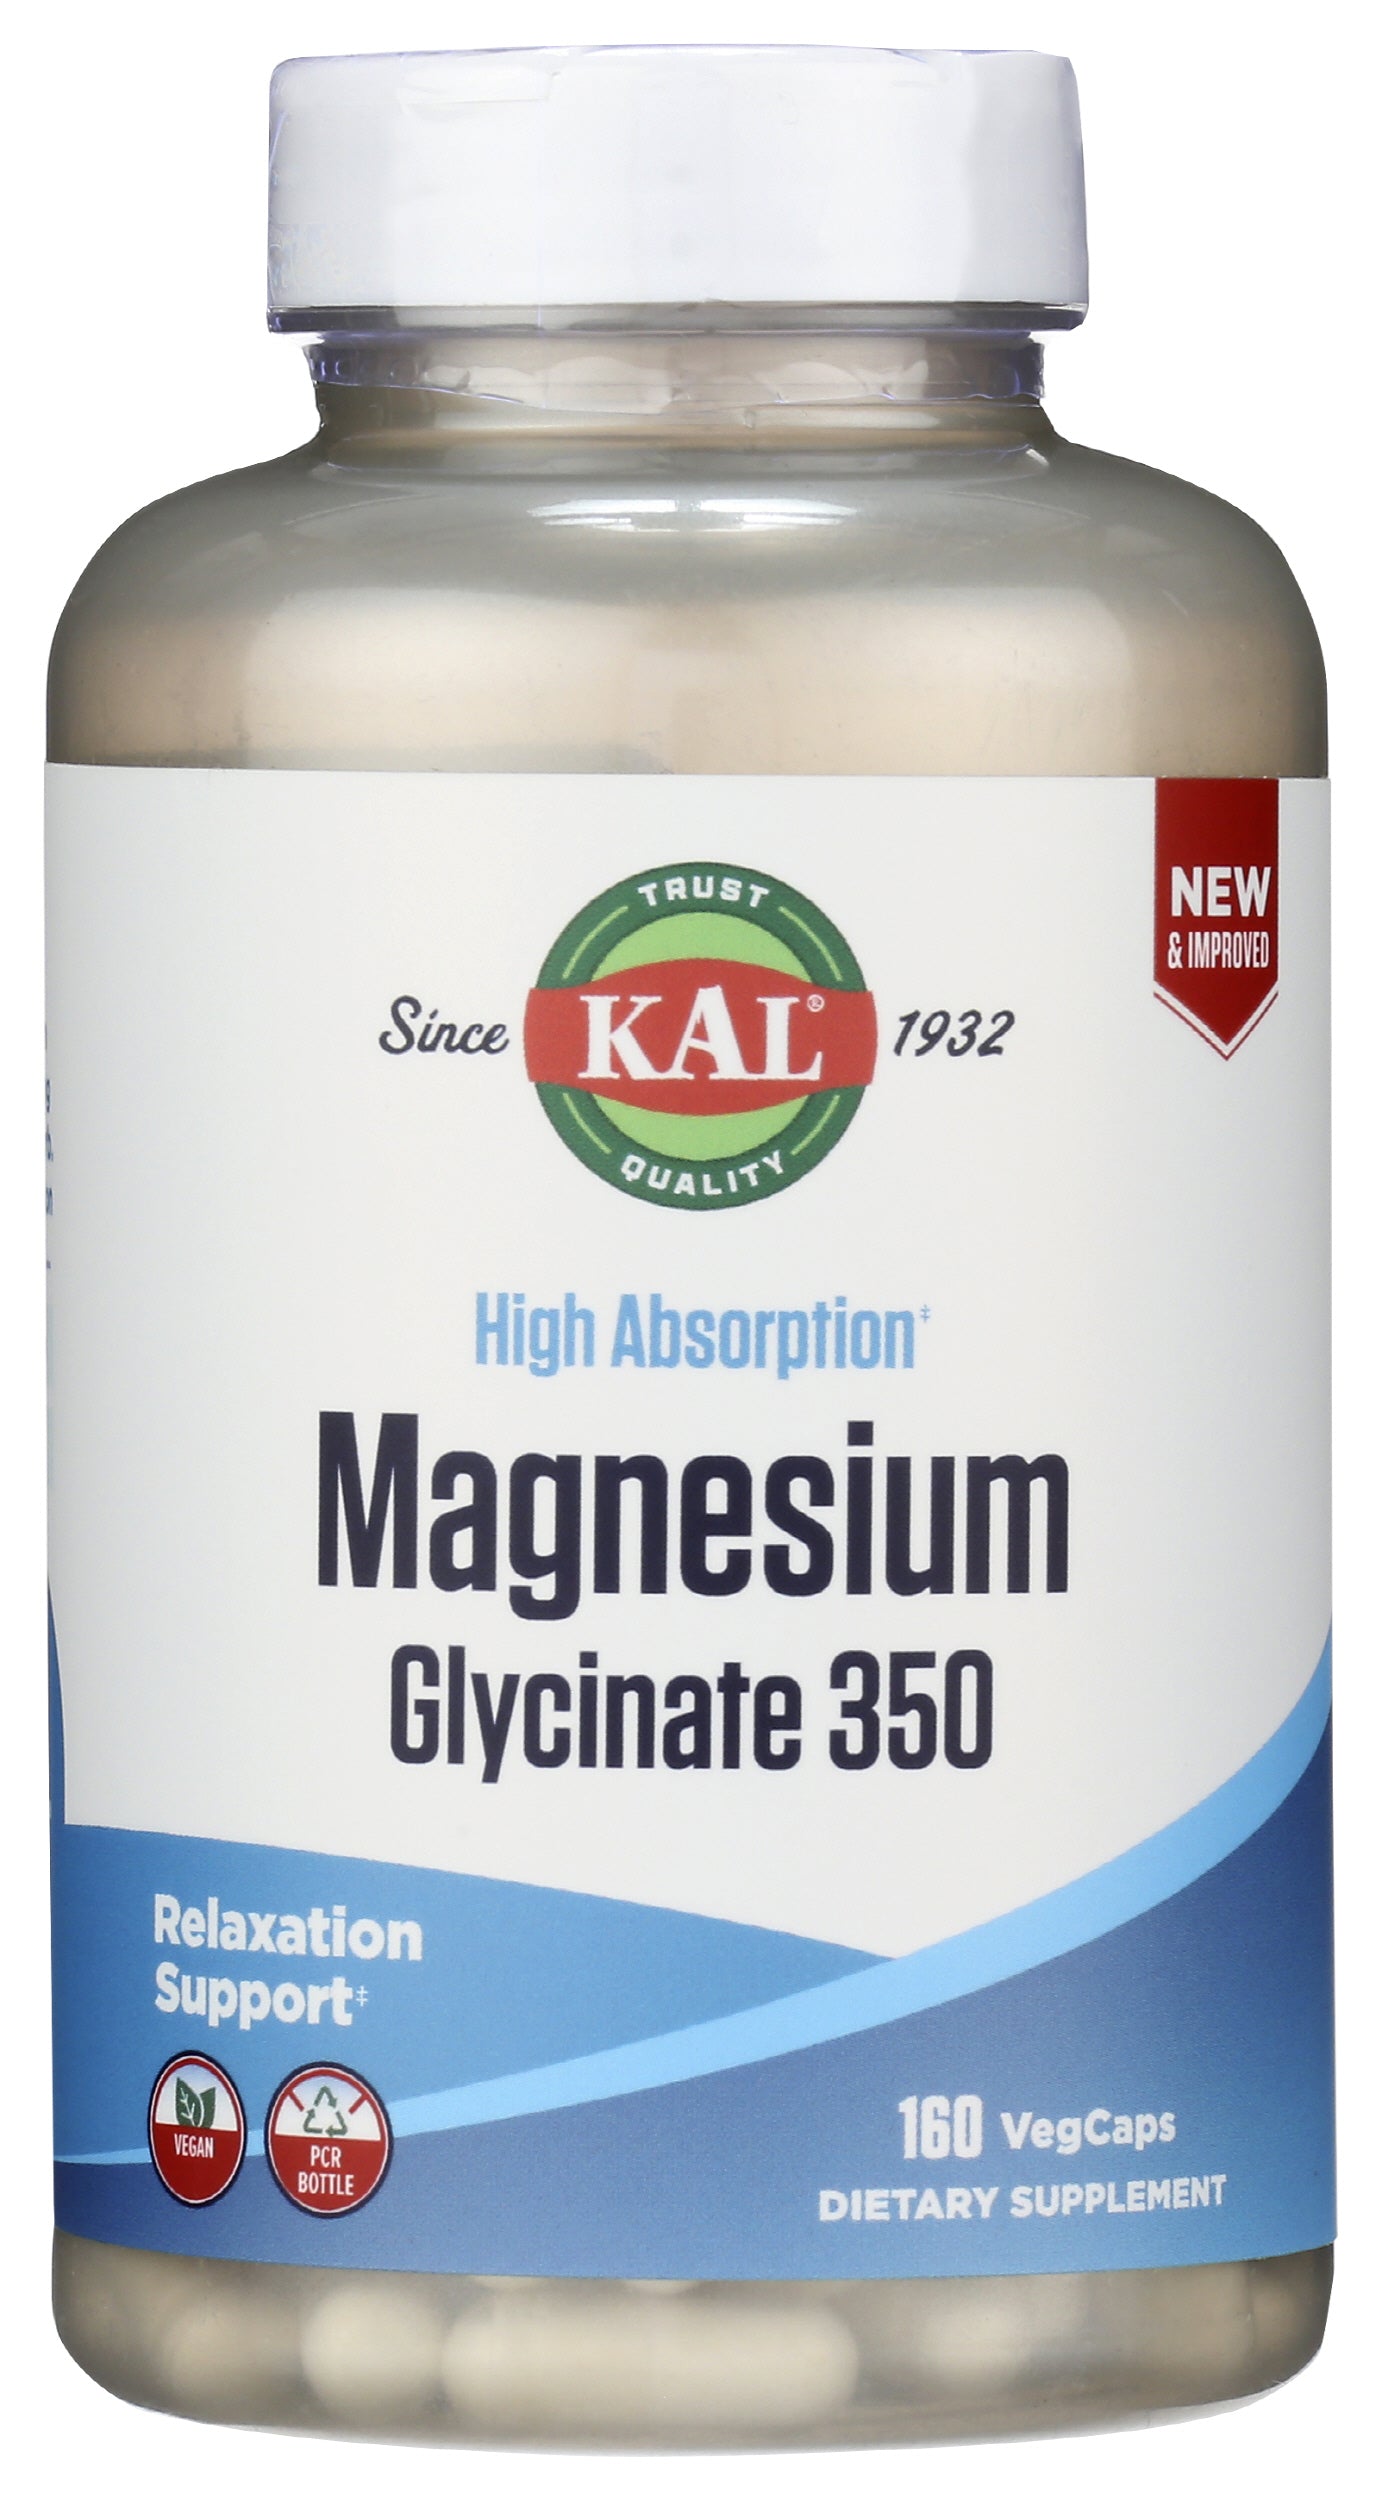 KAL Magnesium Glycinate 350 160 VegCaps Front of Bottle